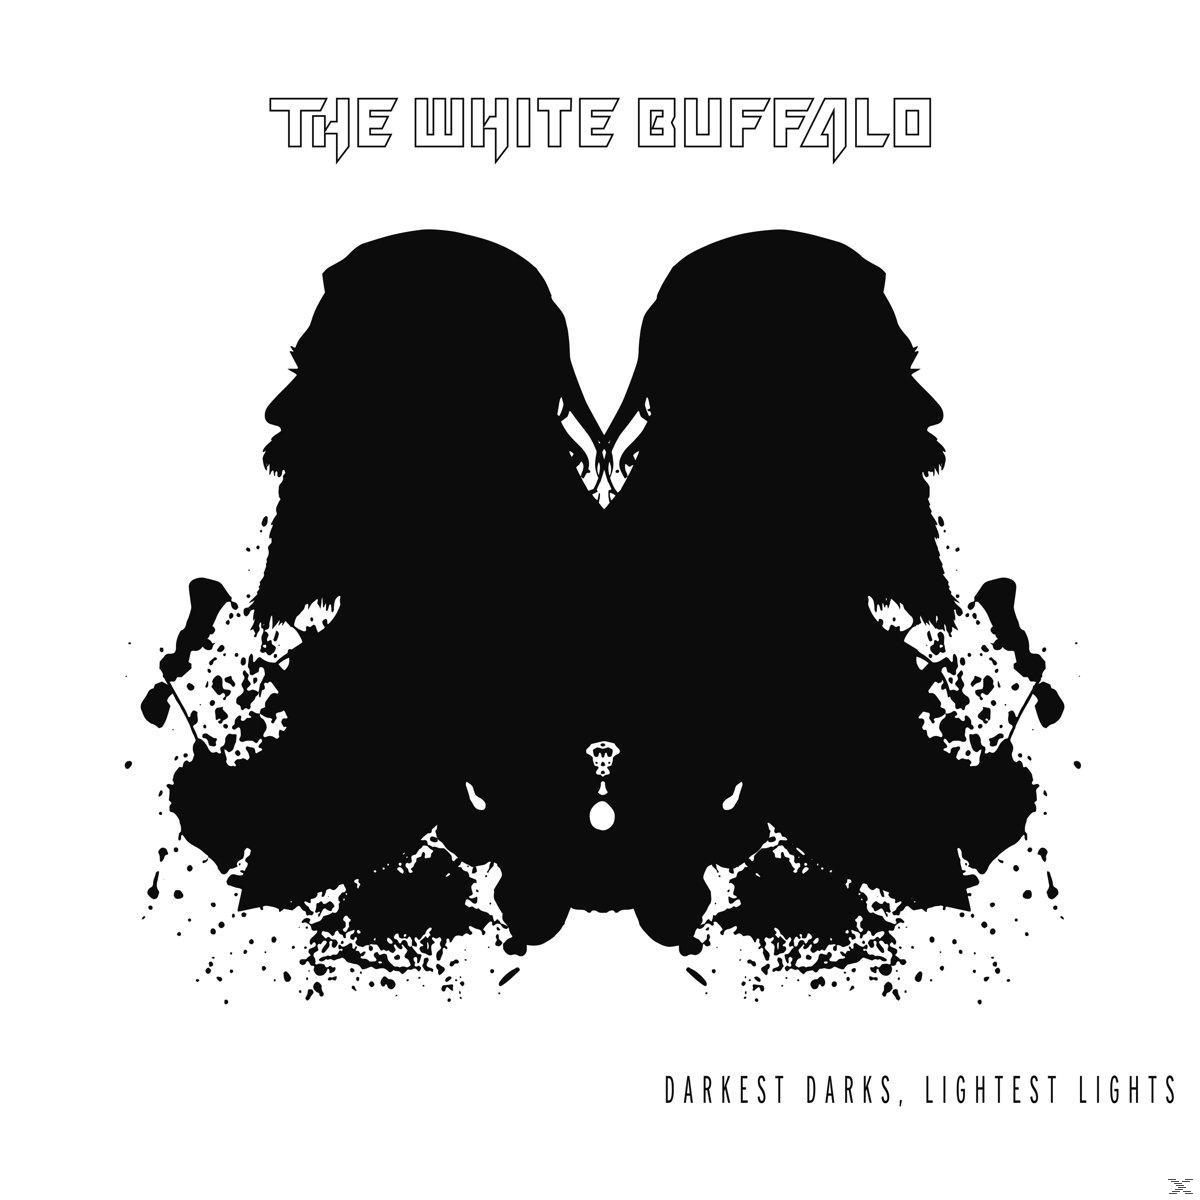 - Darks, Darkest White (CD) - Lightest The Buffalo Lights